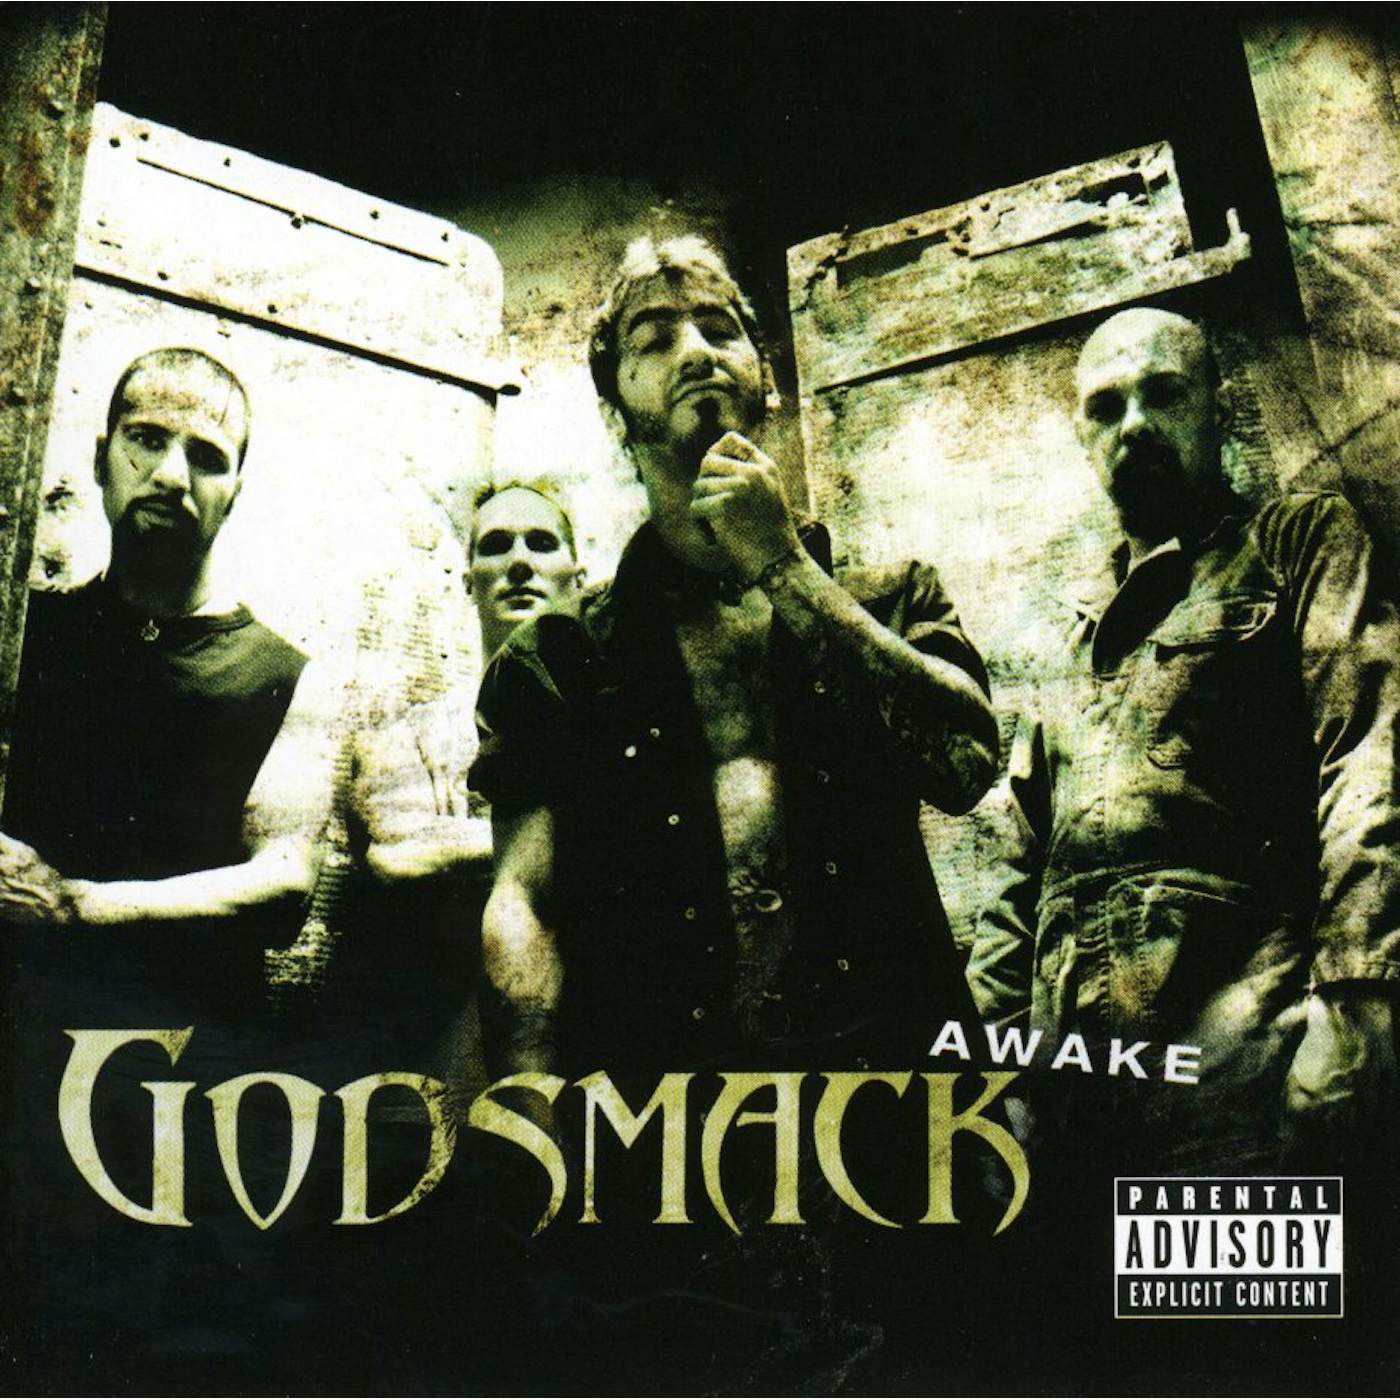 Godsmack AWAKE CD